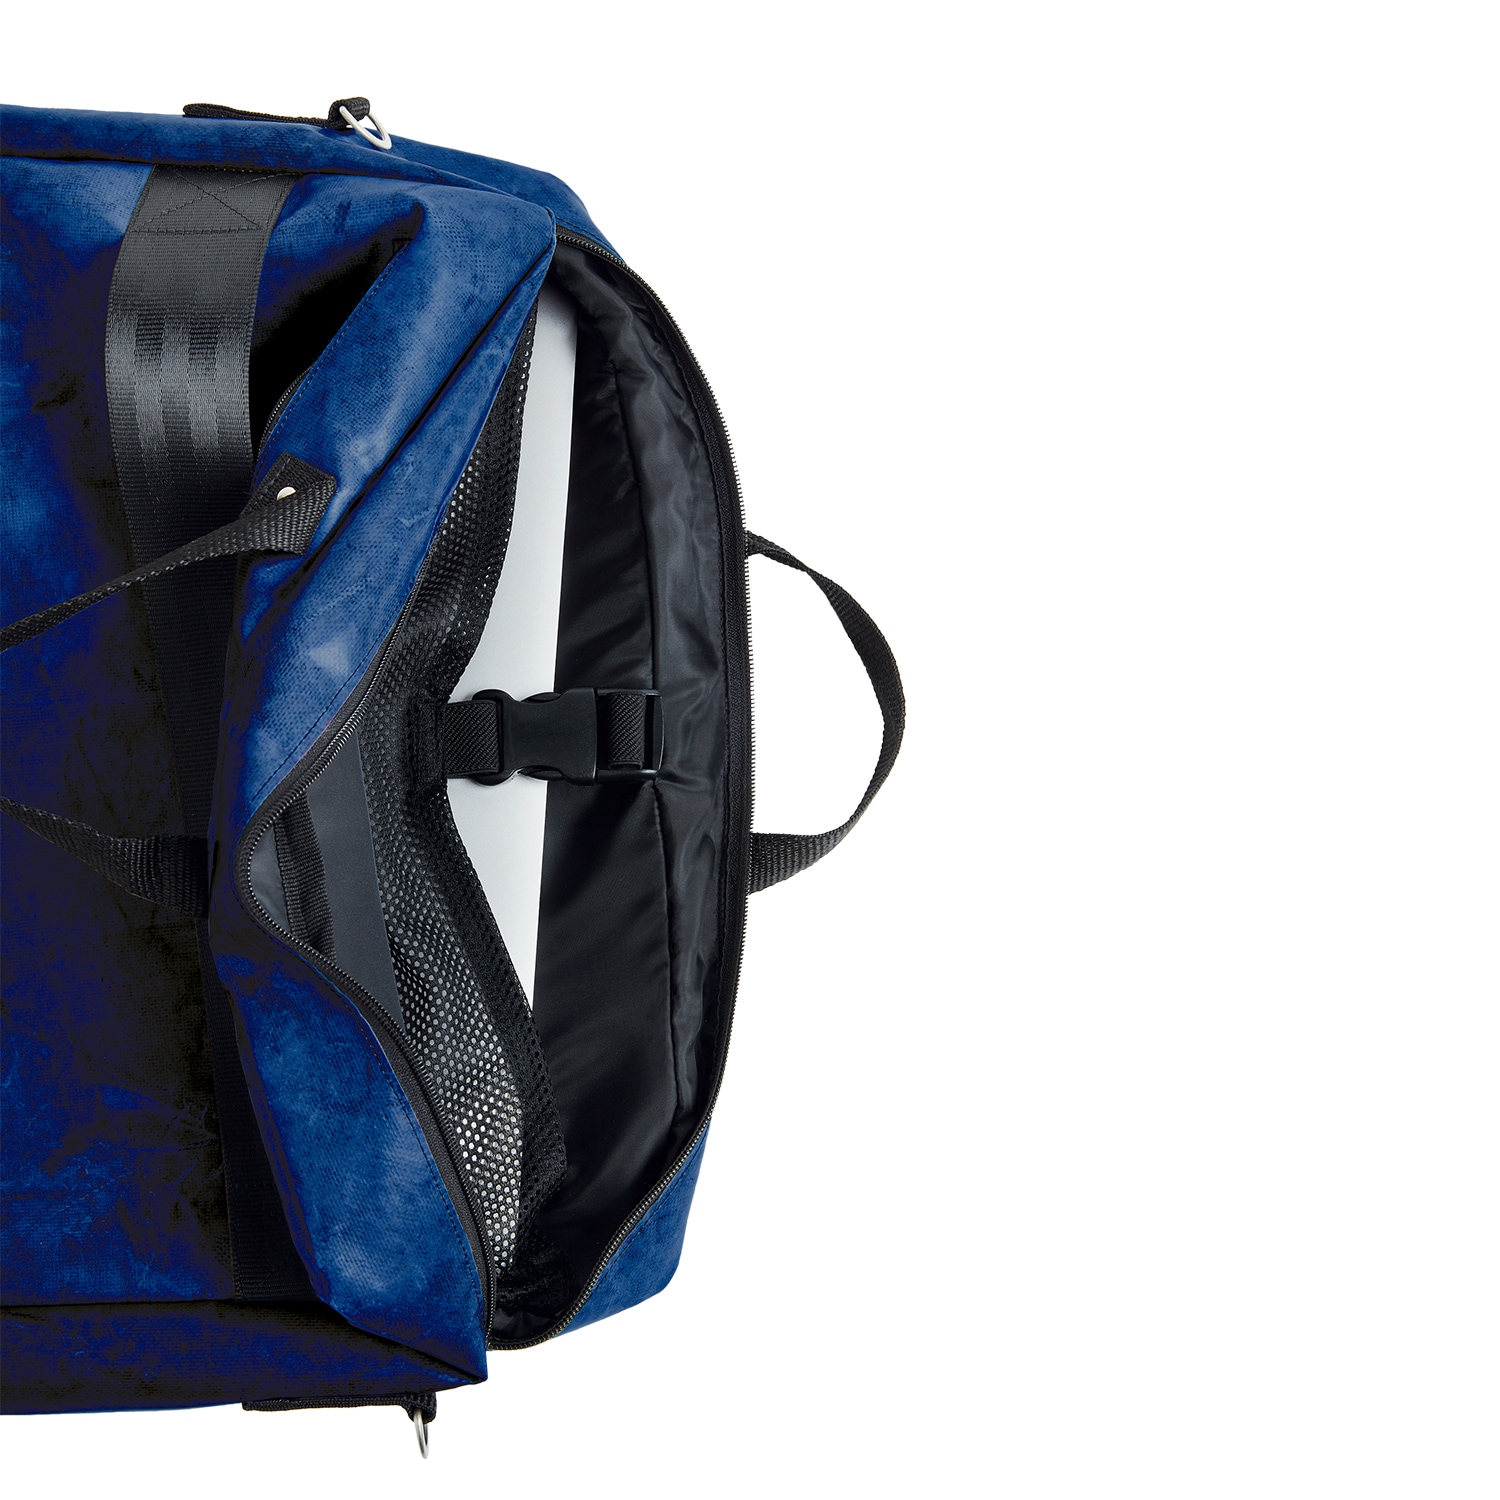 Bag to Life Messenger Bag »Air_plane blau«, im praktischen Design